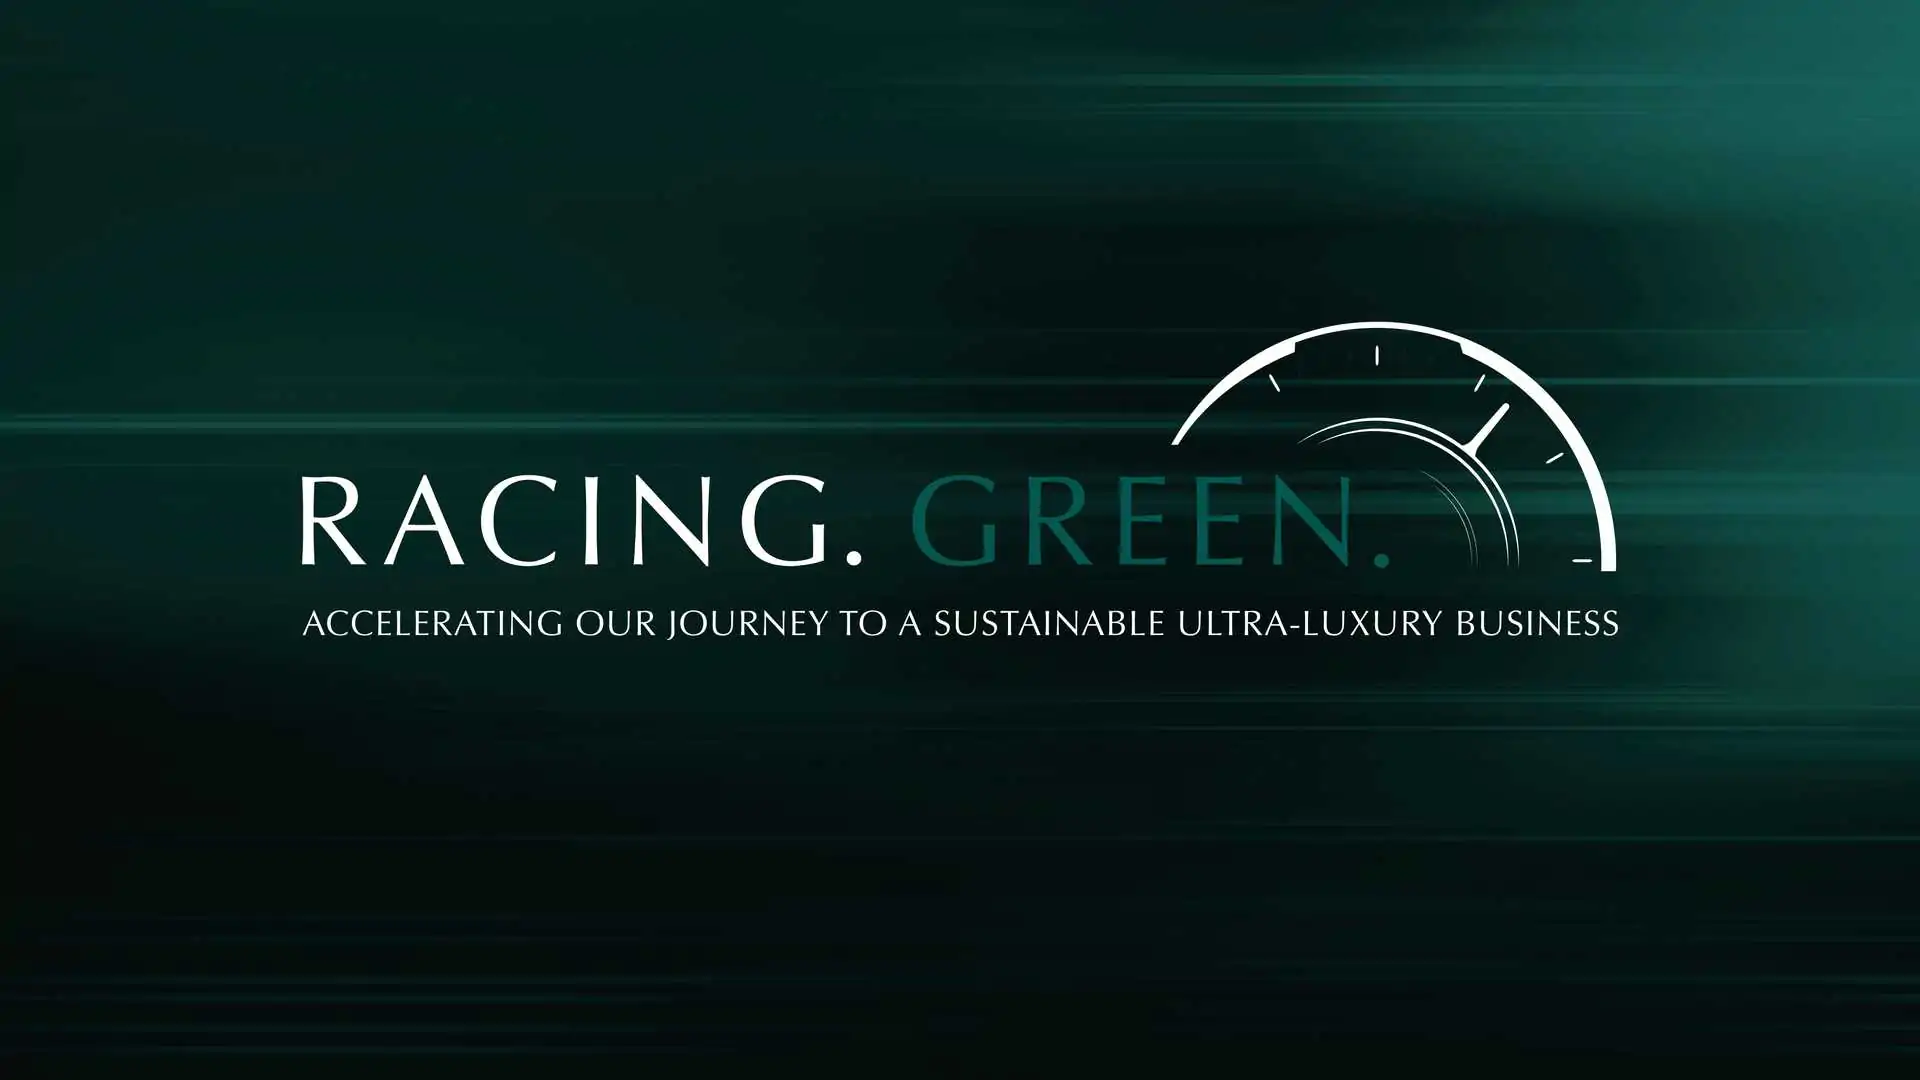 Menyambut Era Elektrifikasi, Aston Martin Mengkampanyekan Strategi Elektrifikasi “Racing Green”